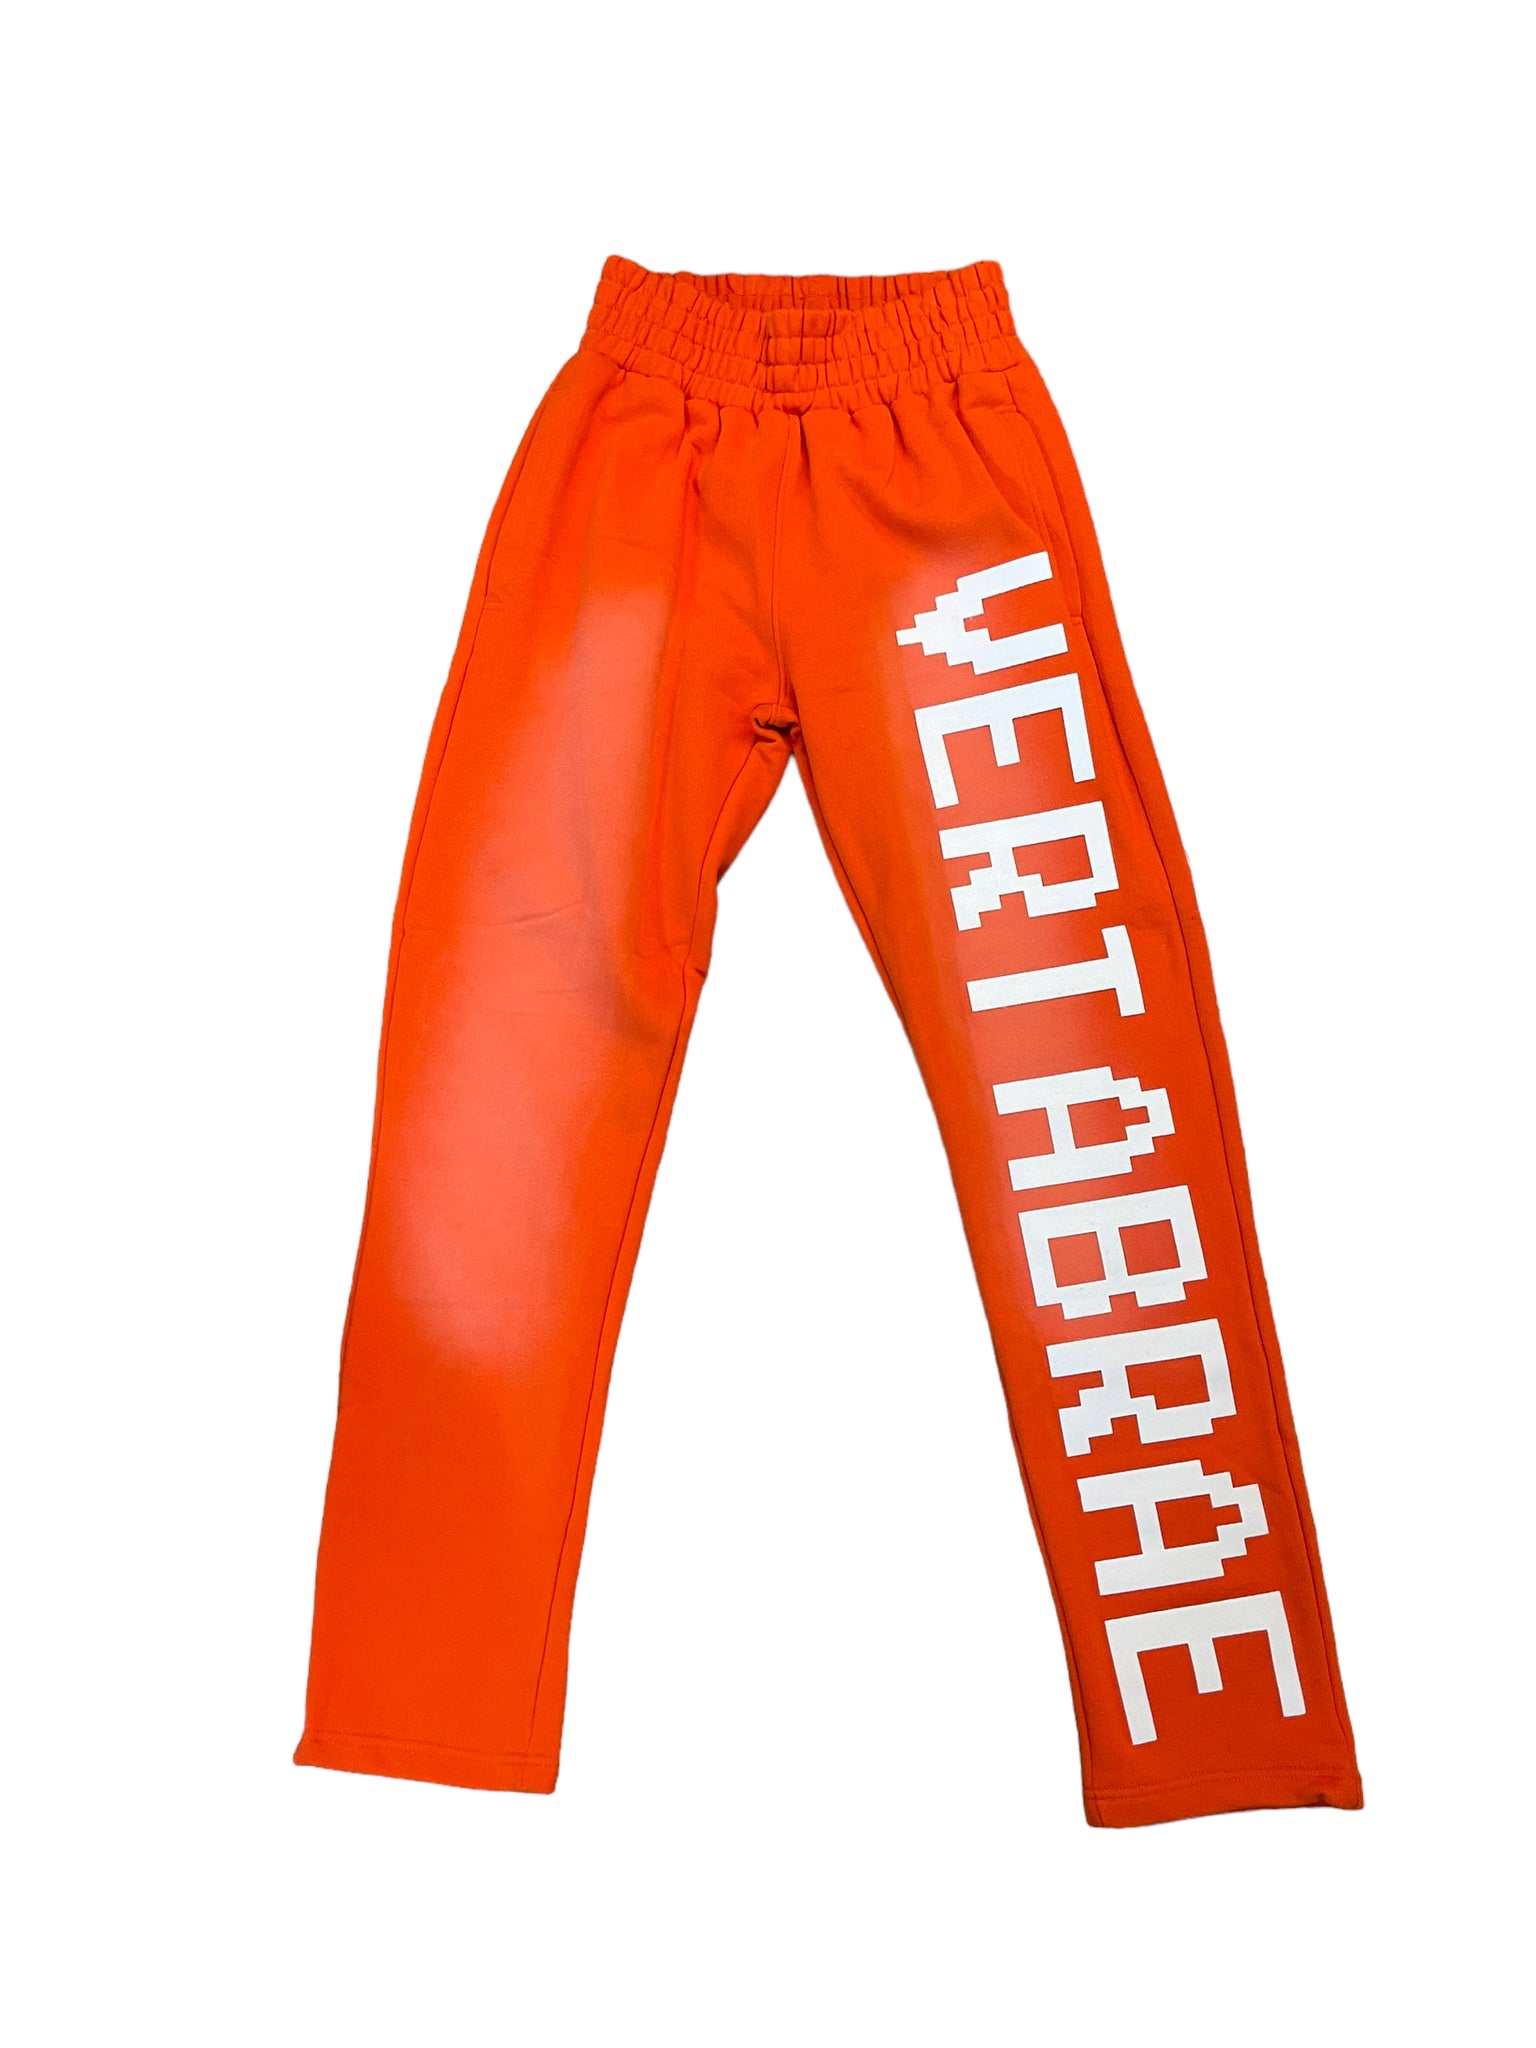 Vertabrae Sweatpants "Orange/White"